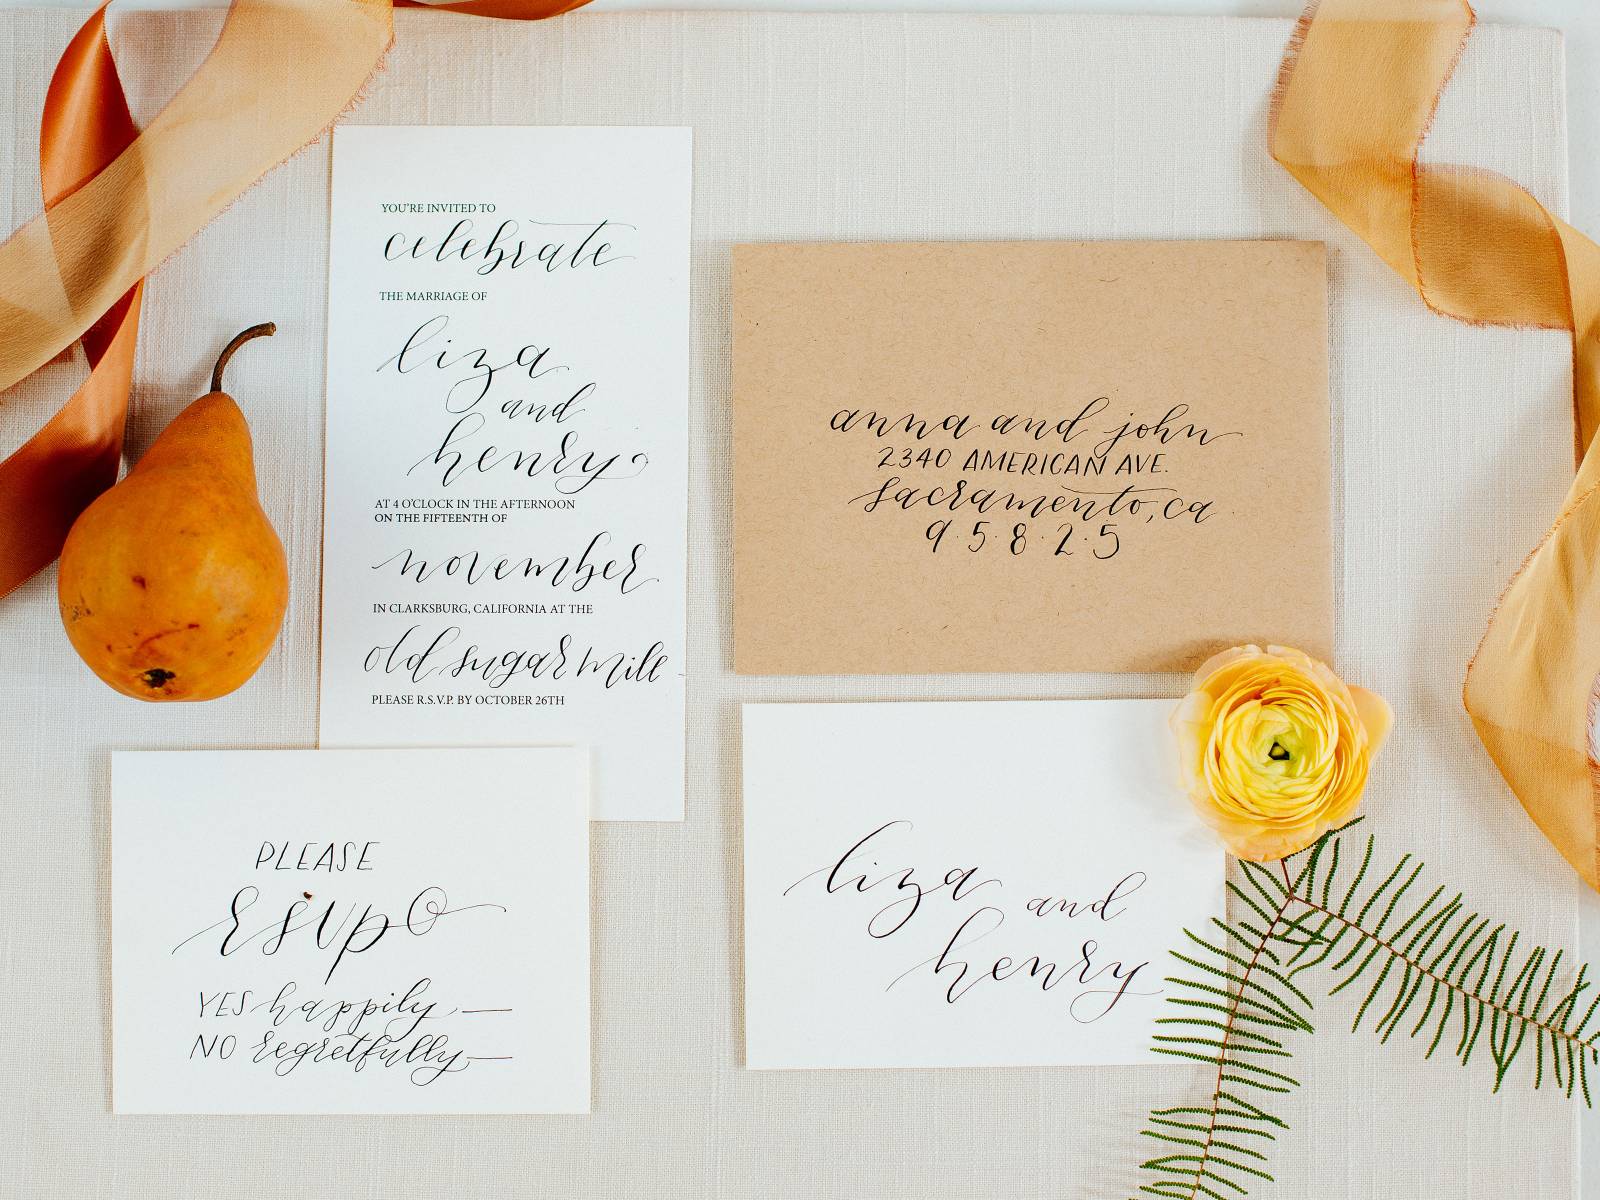 White wedding stationery and tan envelope